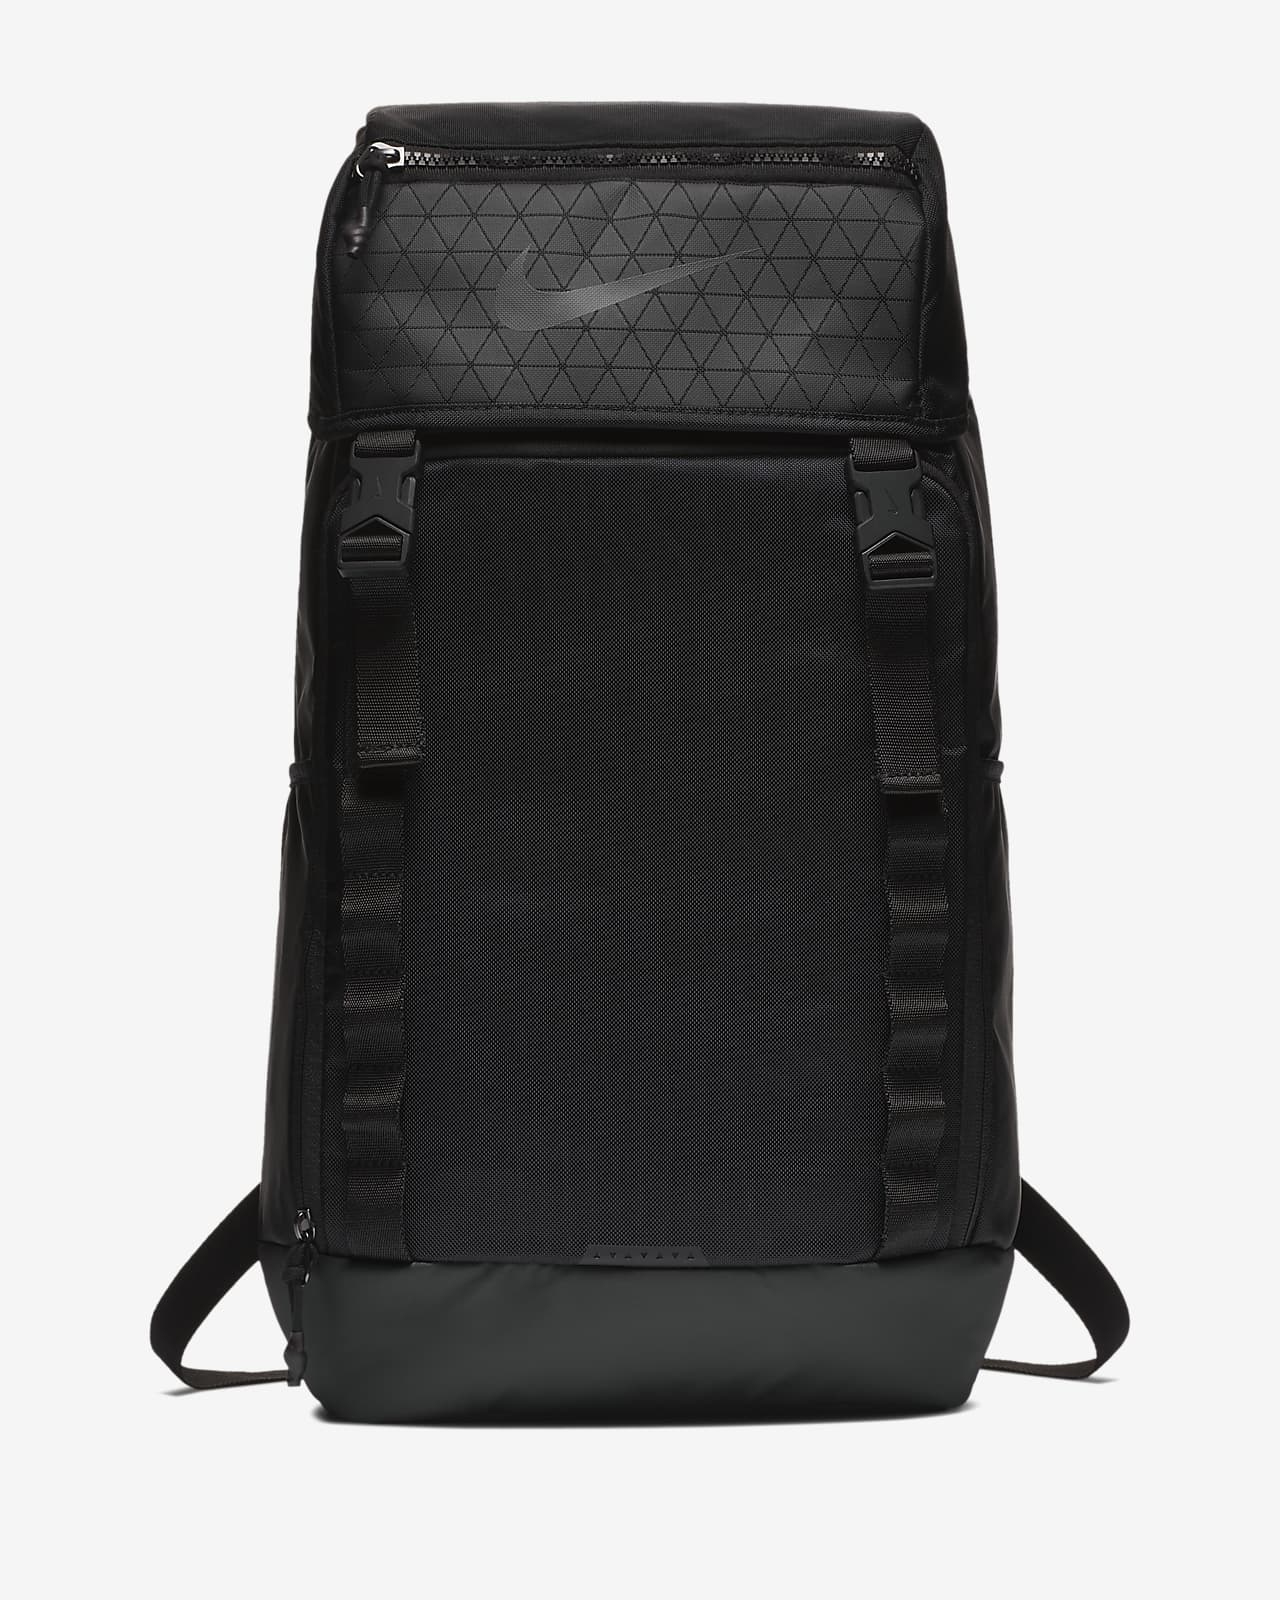 vapor 2. backpack